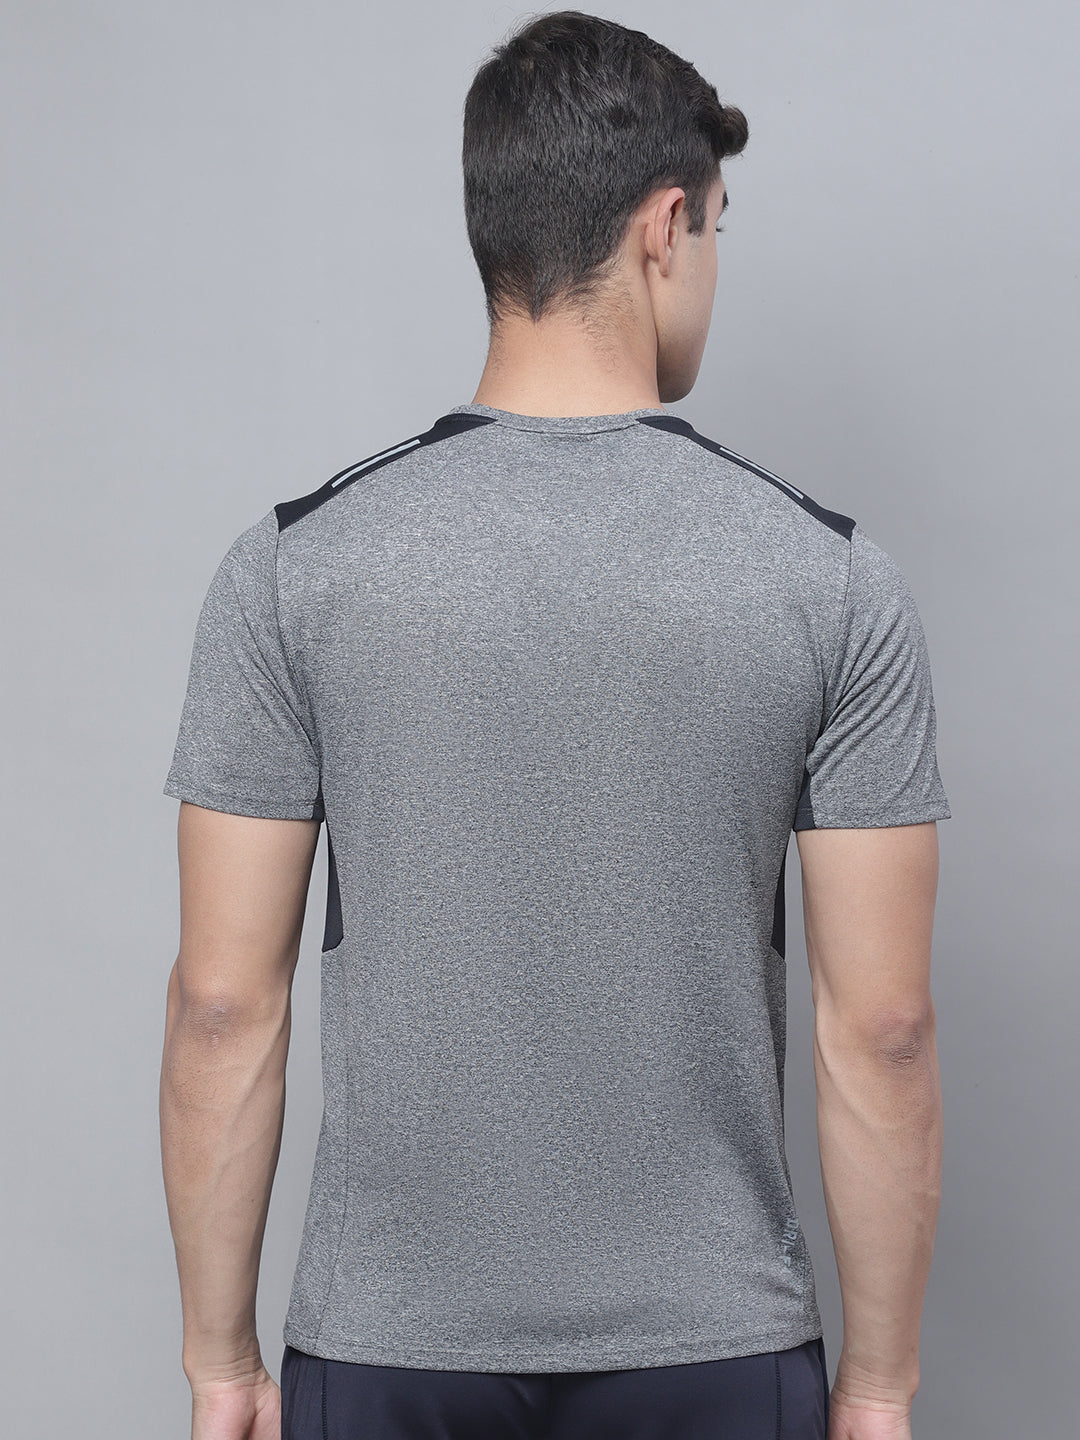 Men Half Sleeves Grey Round Neck Sports T-Shirt - Friskers